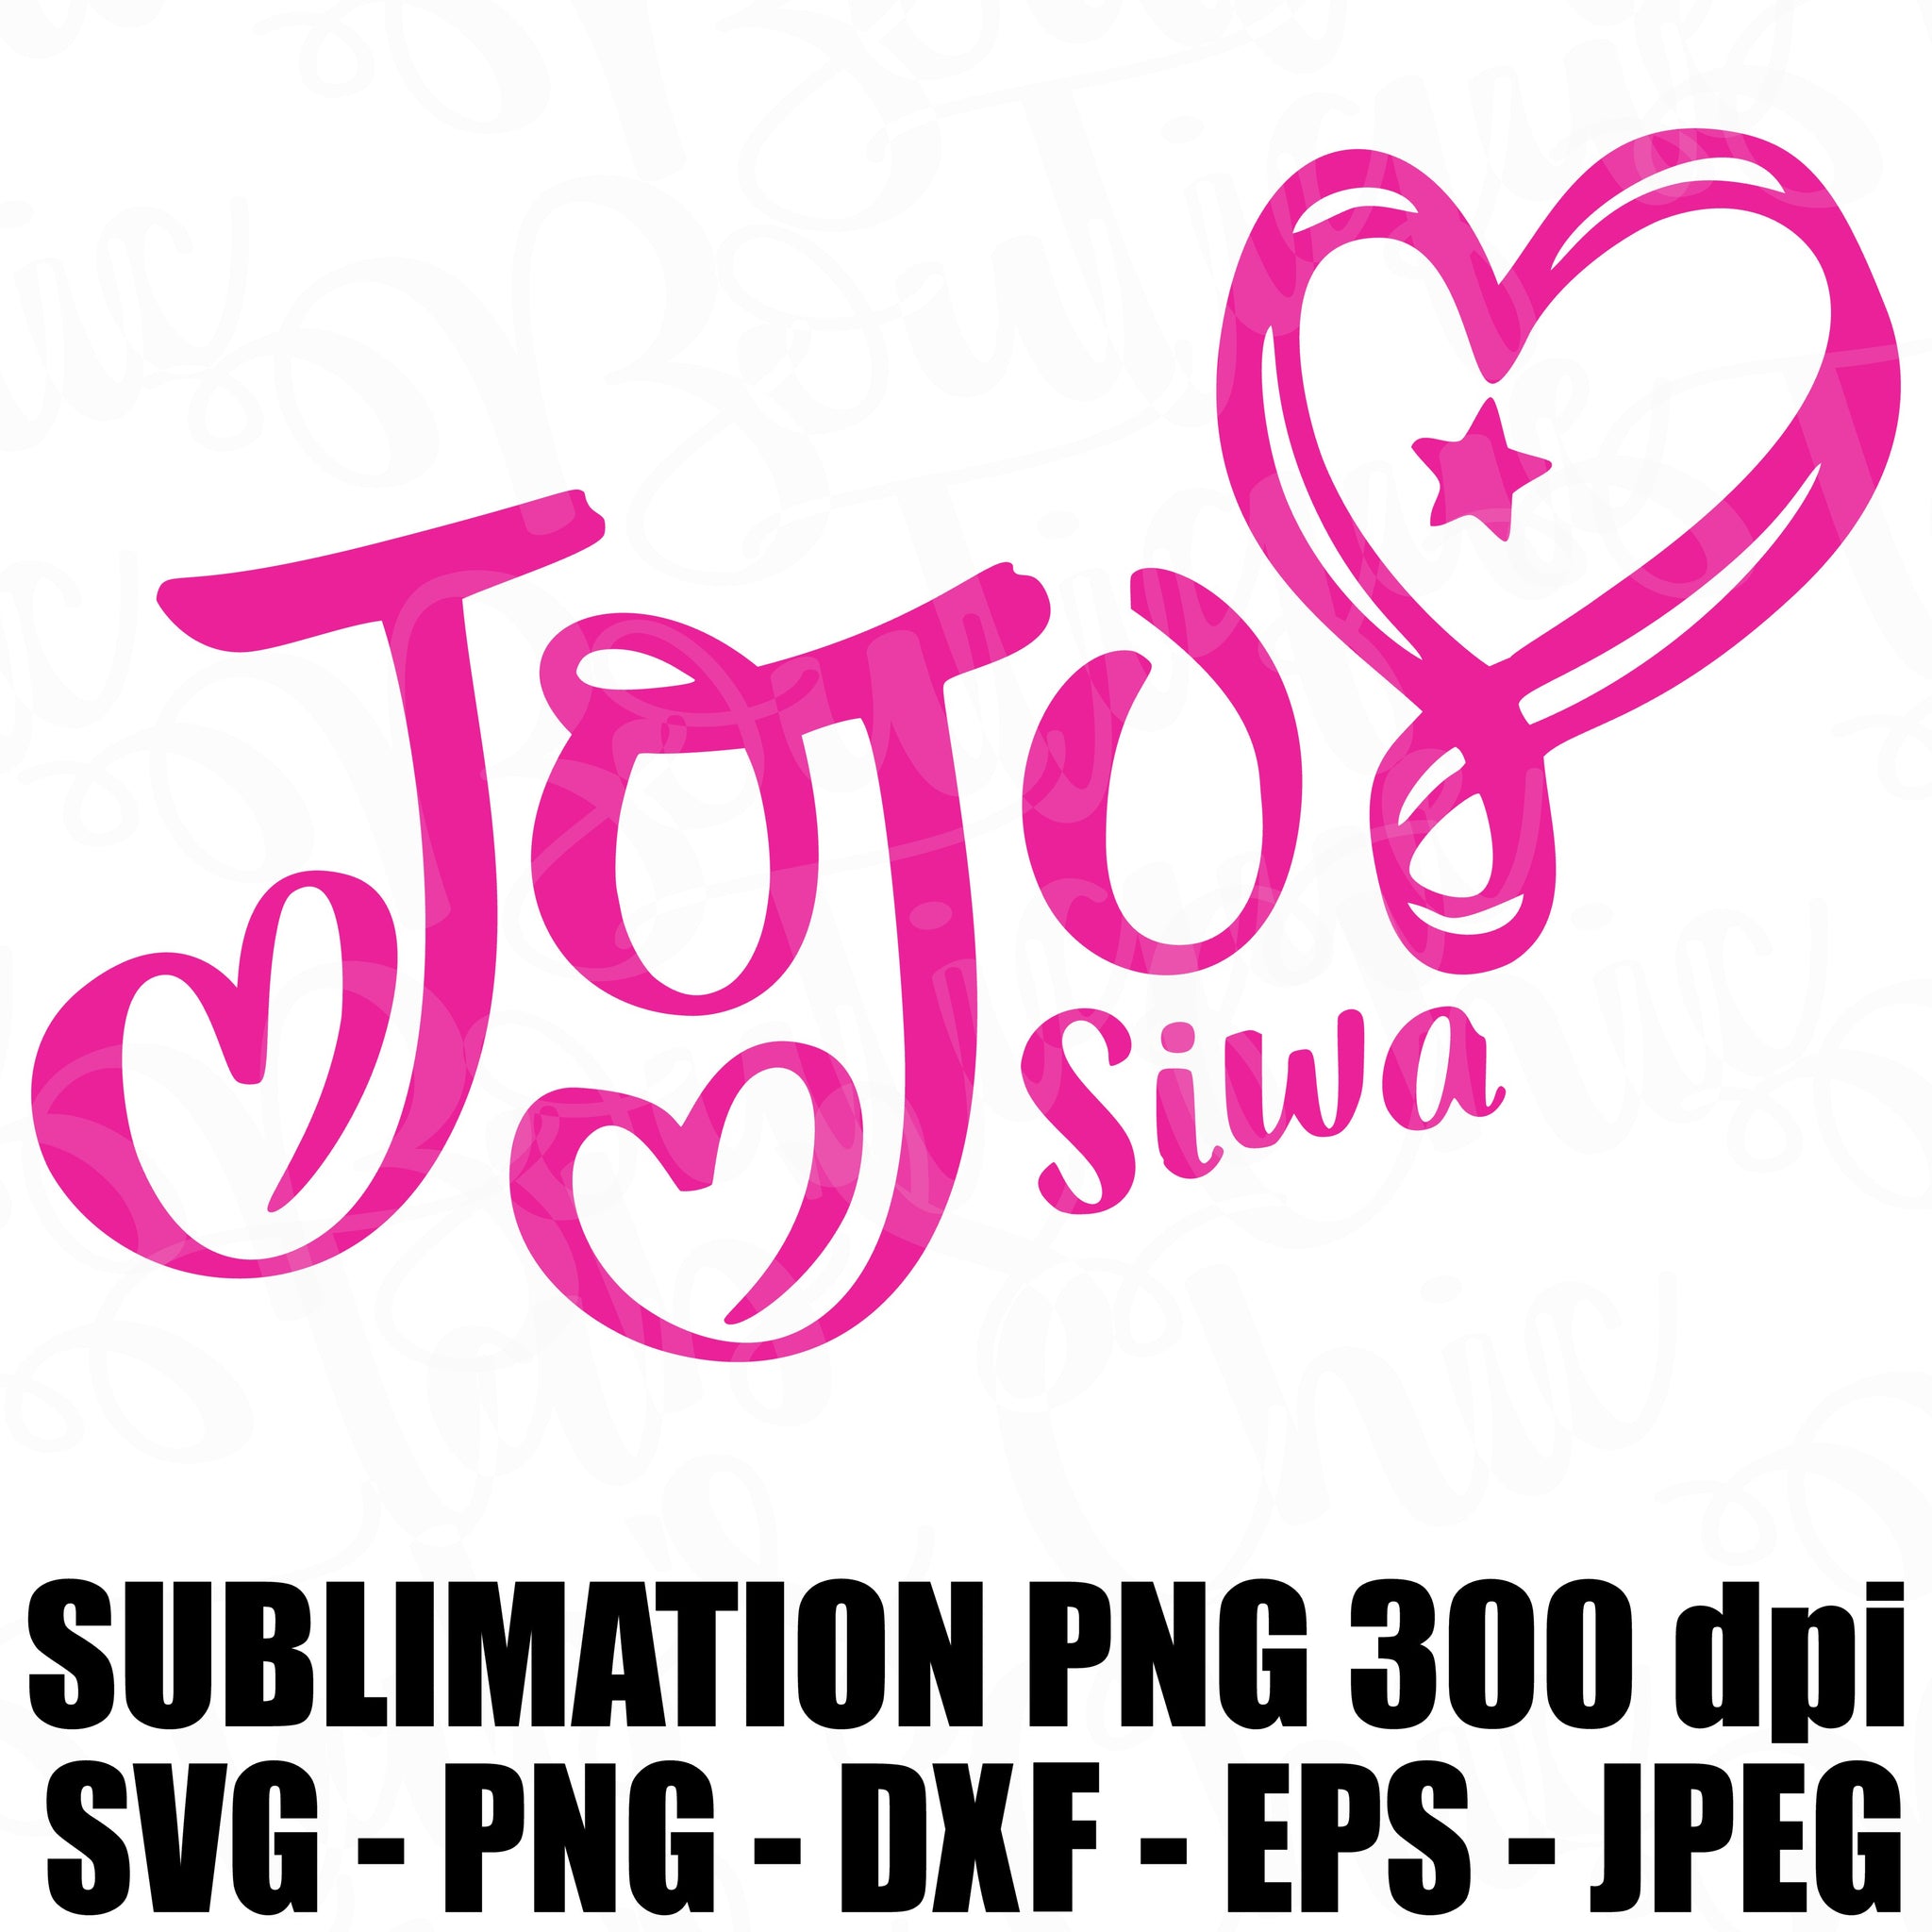 Download Jojo Siwa Logo Svg Jpeg High Def 300 Dpi Png Eps Dxf Topper Sublimatio Tab S Chic Boutique